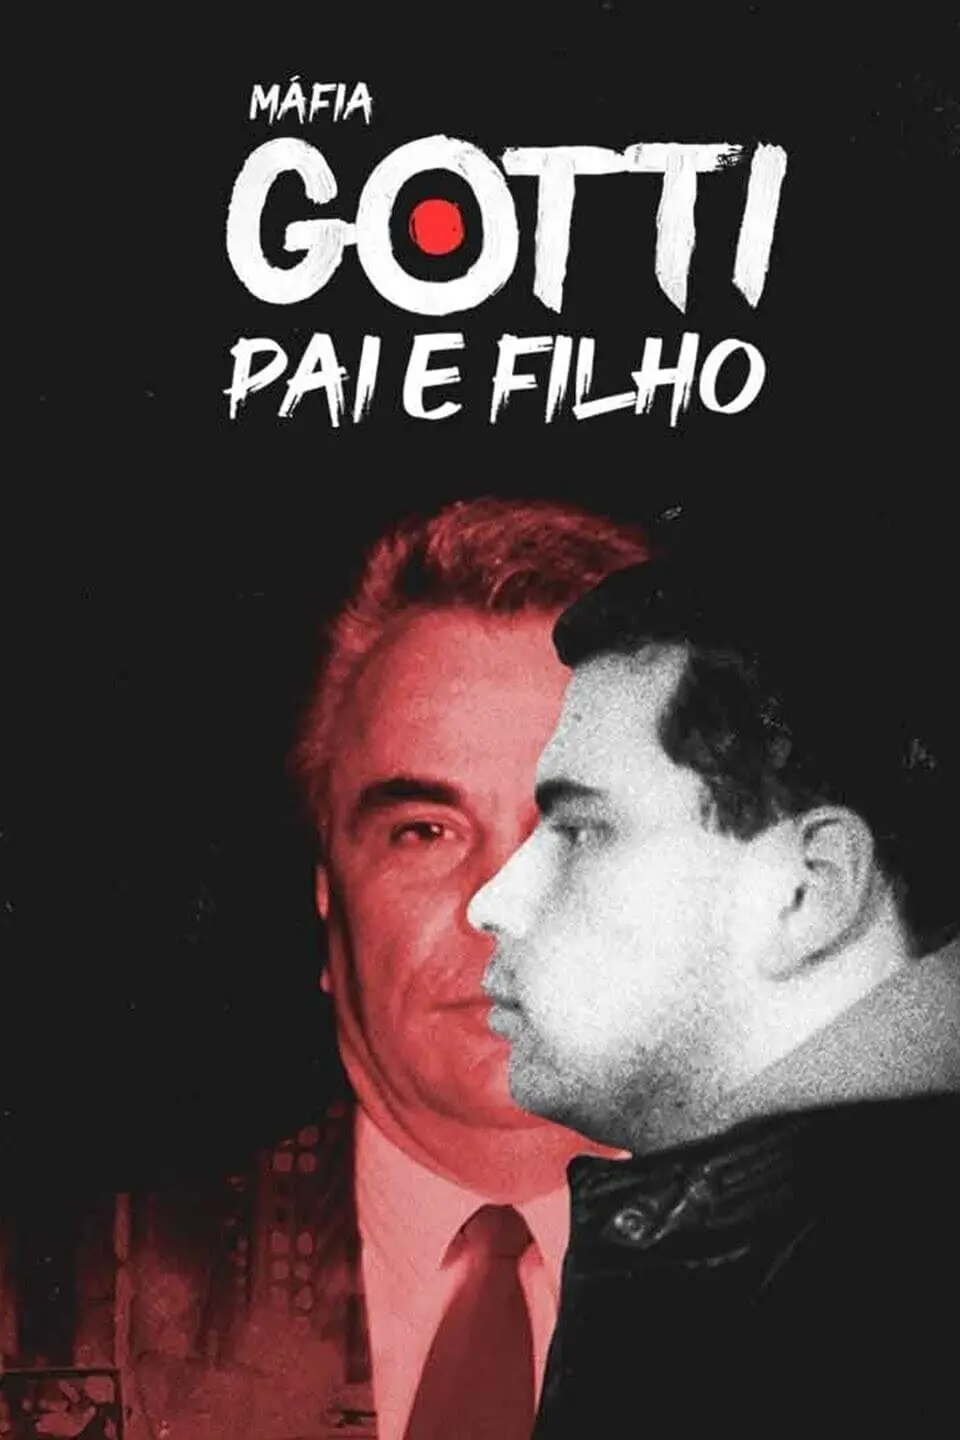 Gotti: Godfather and Son_peliplat